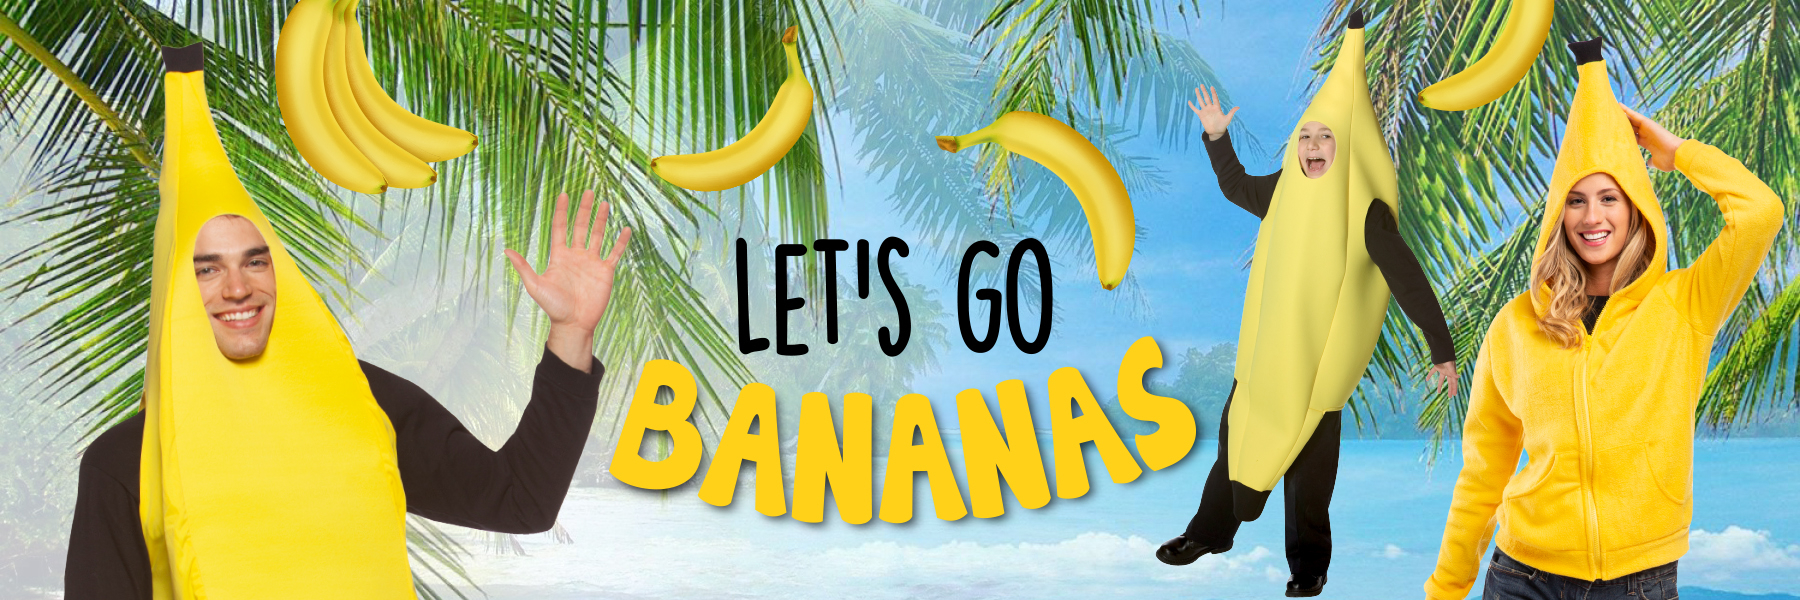 banana man costumes, banana costumes for all ages